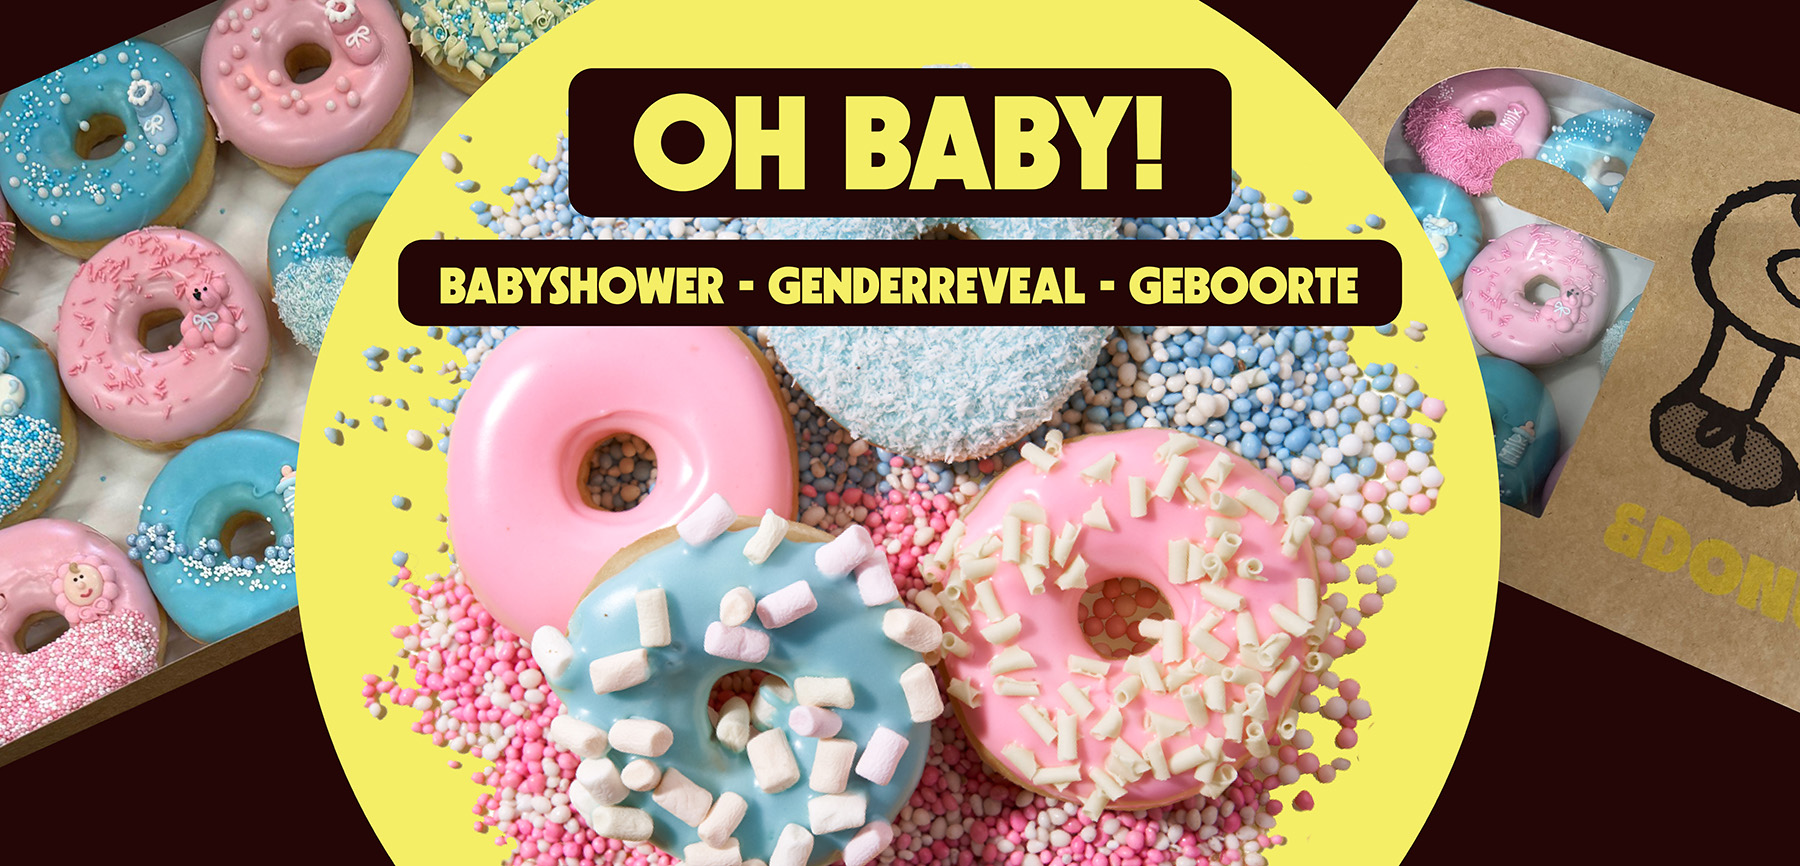 Gender reveal donuts